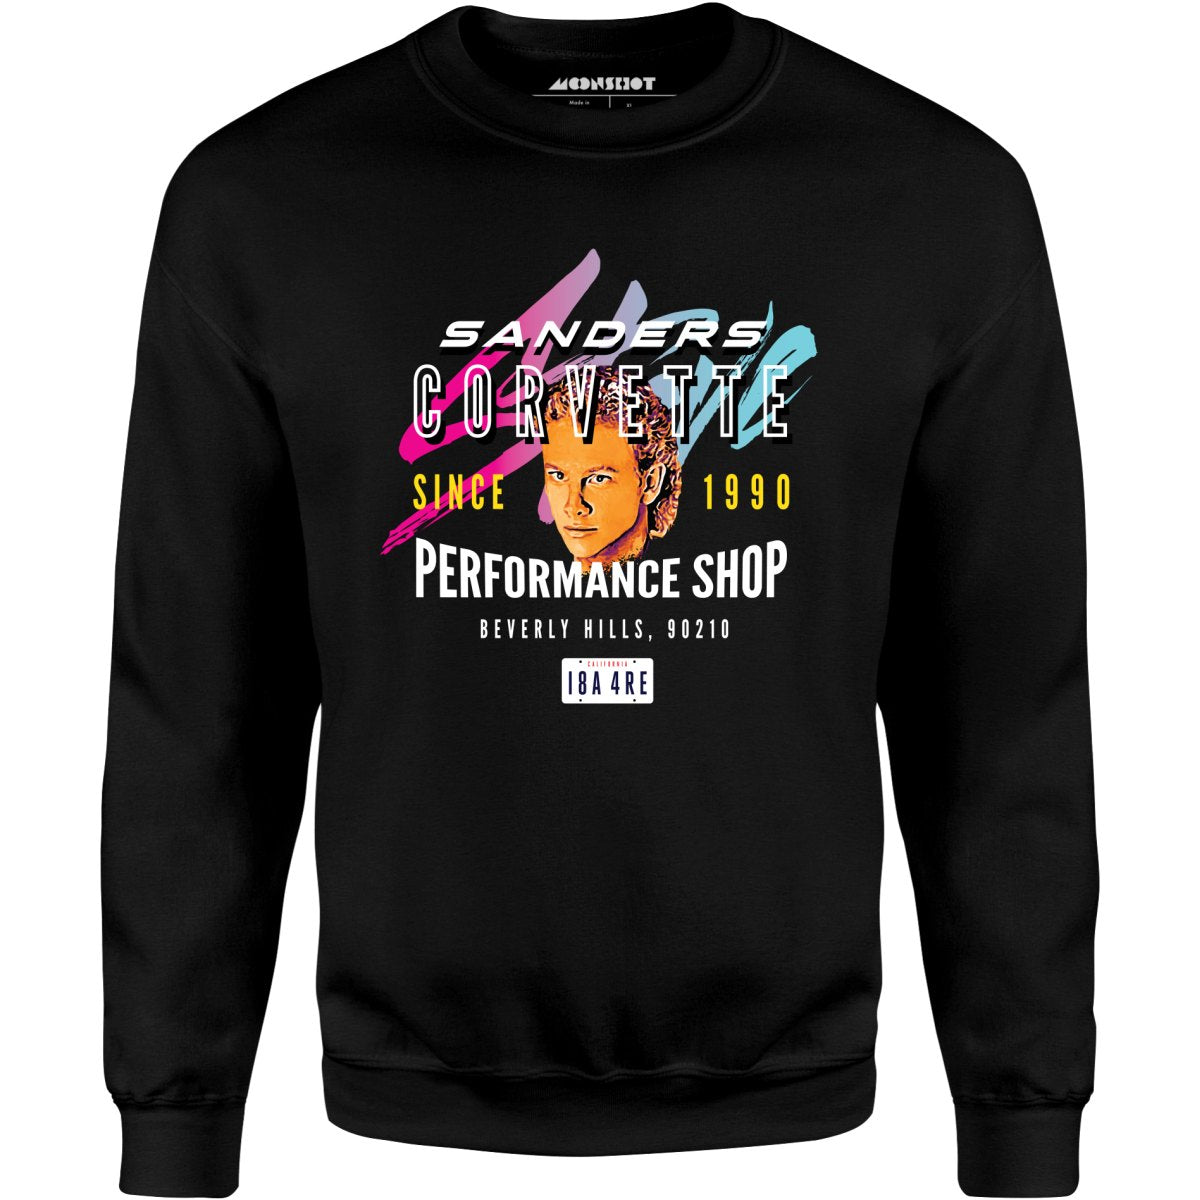 Steve Sanders Corvette Performance Shop - 90210 - Unisex Sweatshirt